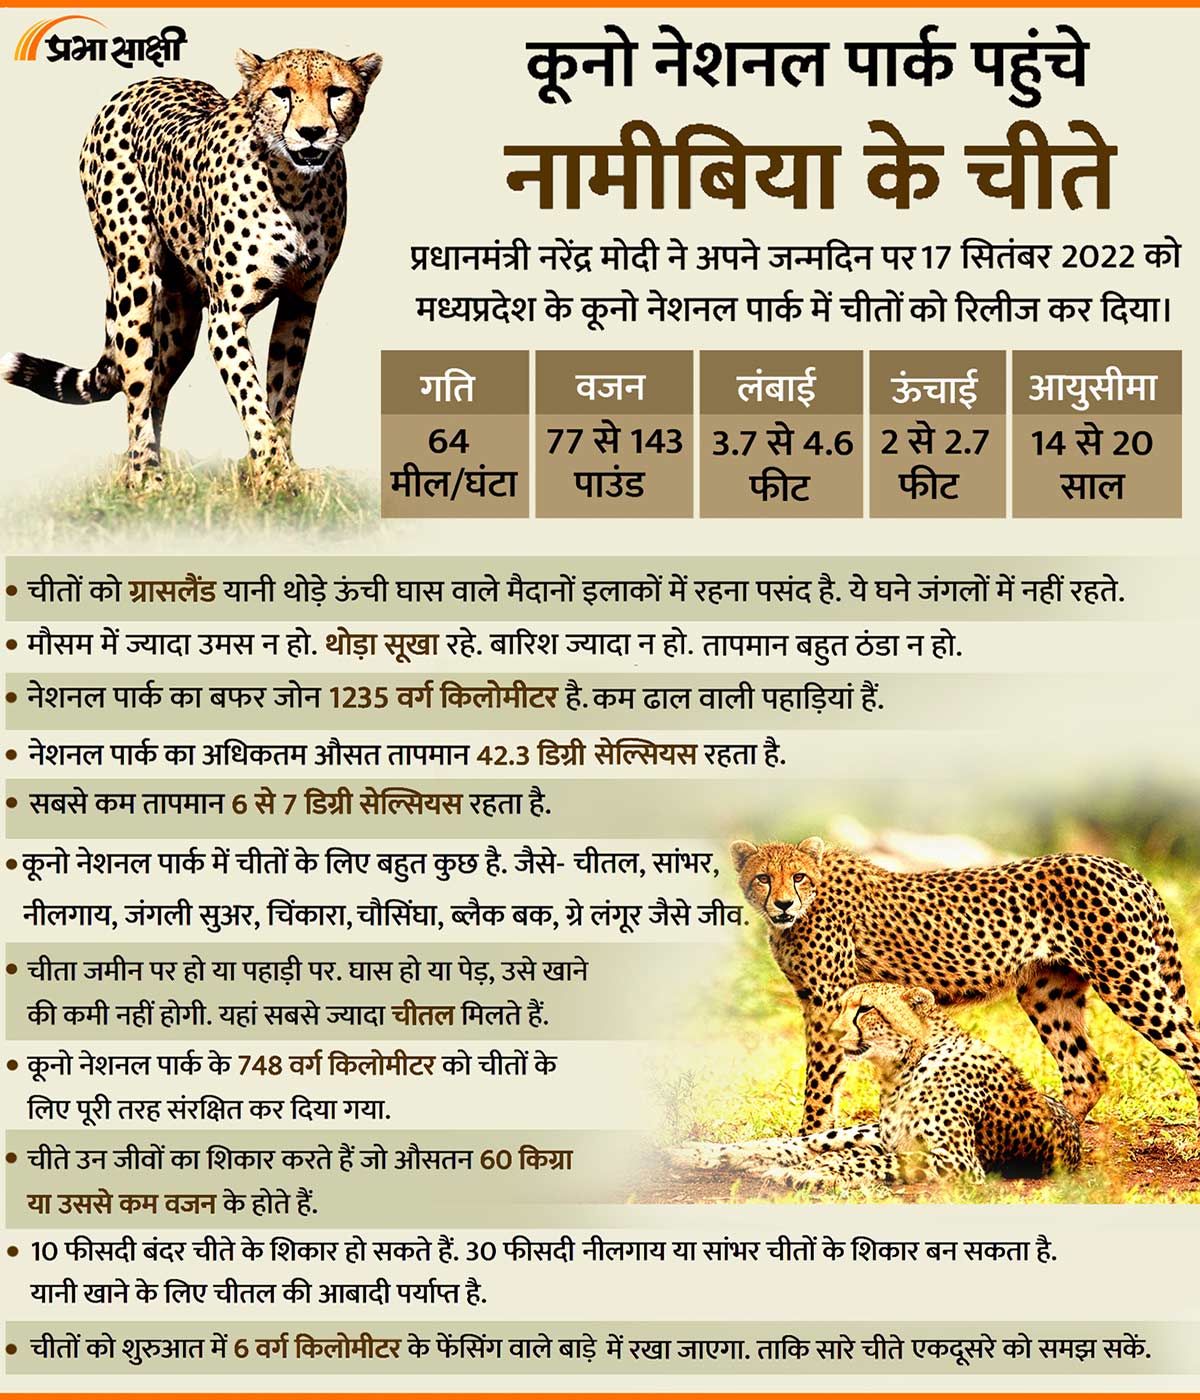 8 Cheetahs Brought to India